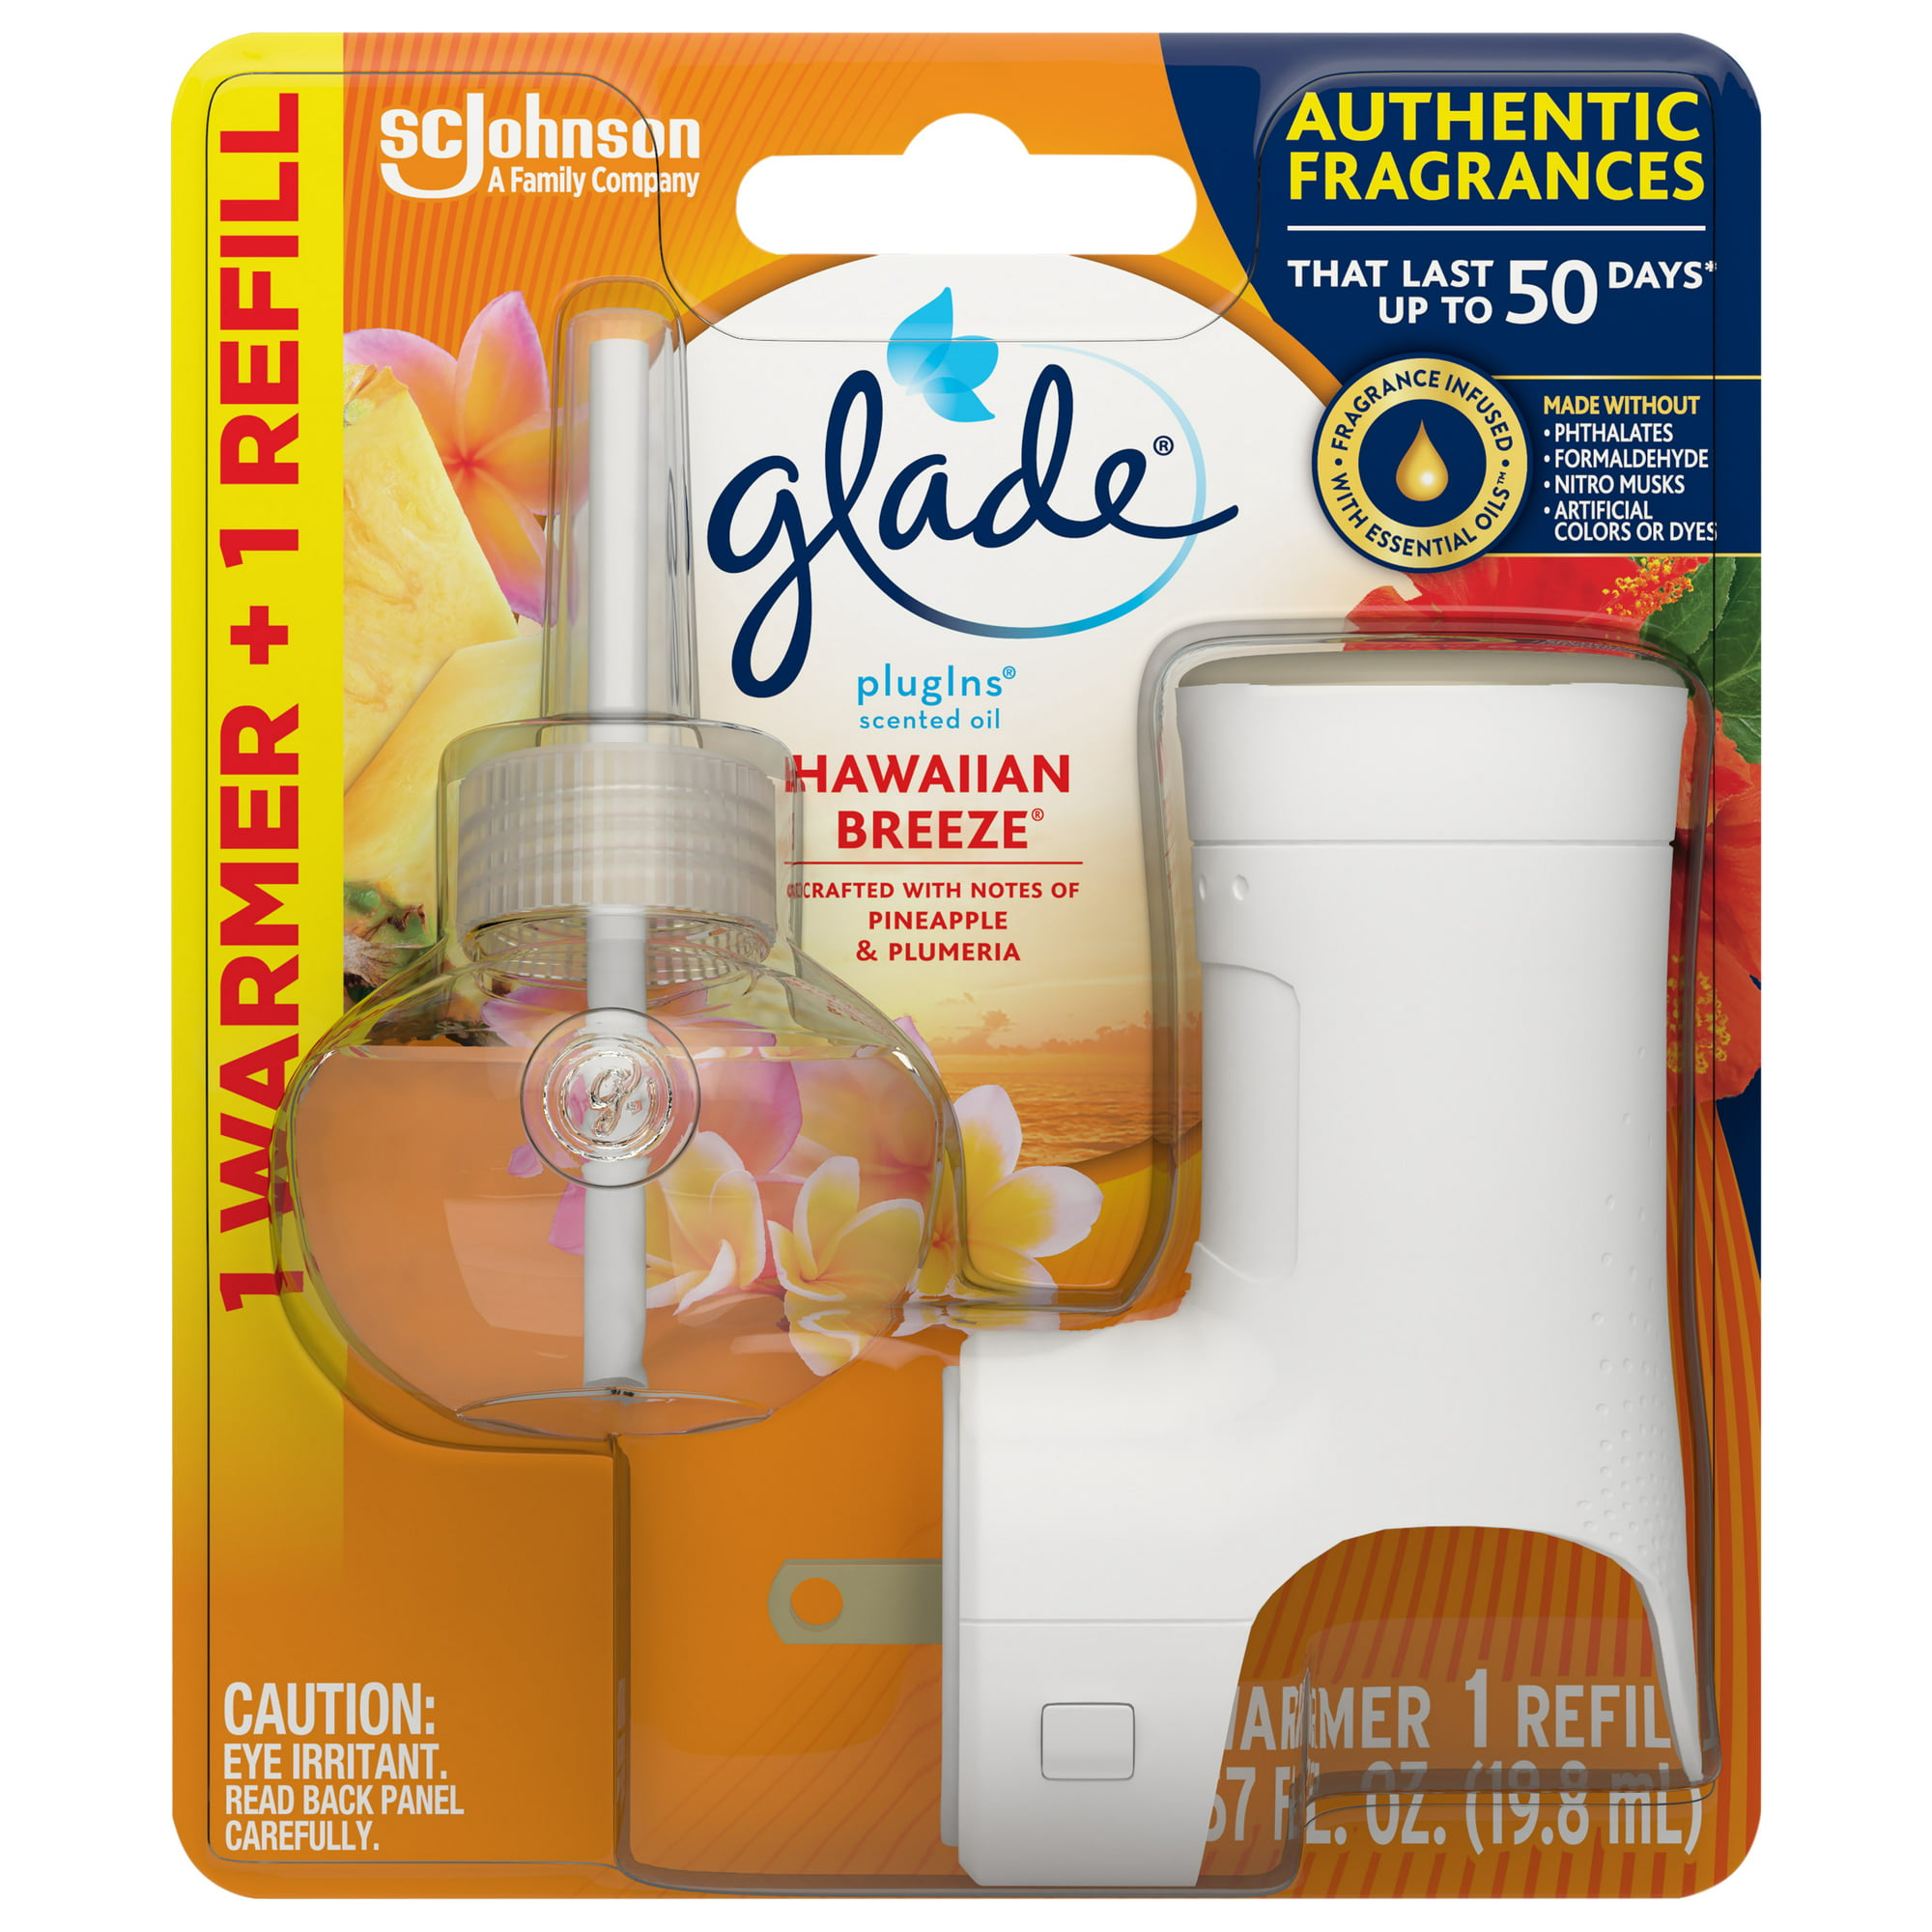 Glade PlugIns Scented Oil Starter kit, Air Freshener, Hawaiian Breeze®, 1.34 oz